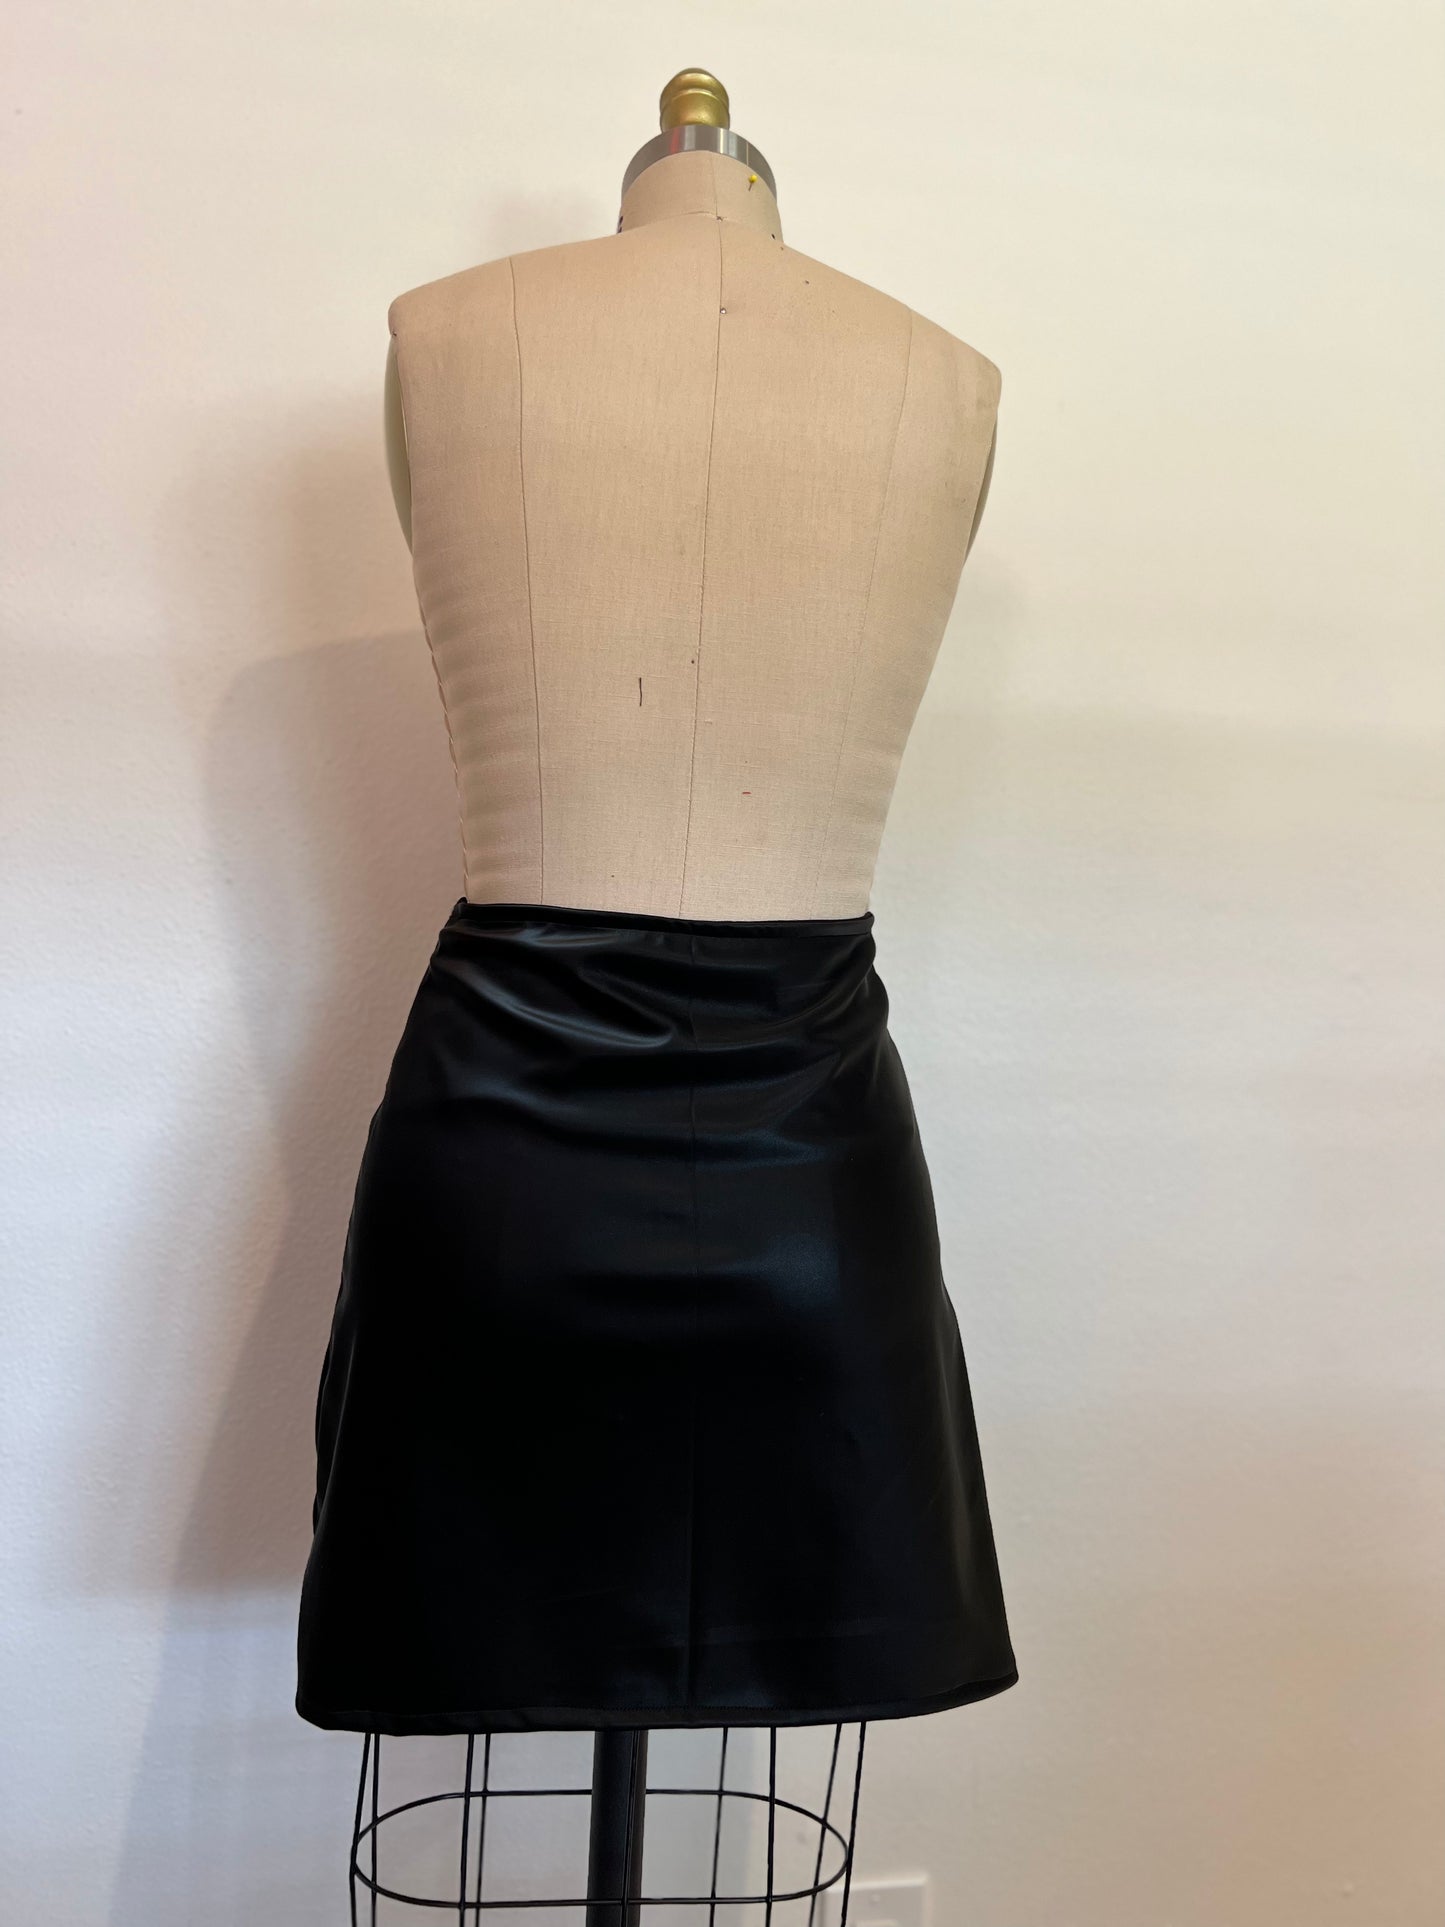 Leather Micro Skirt